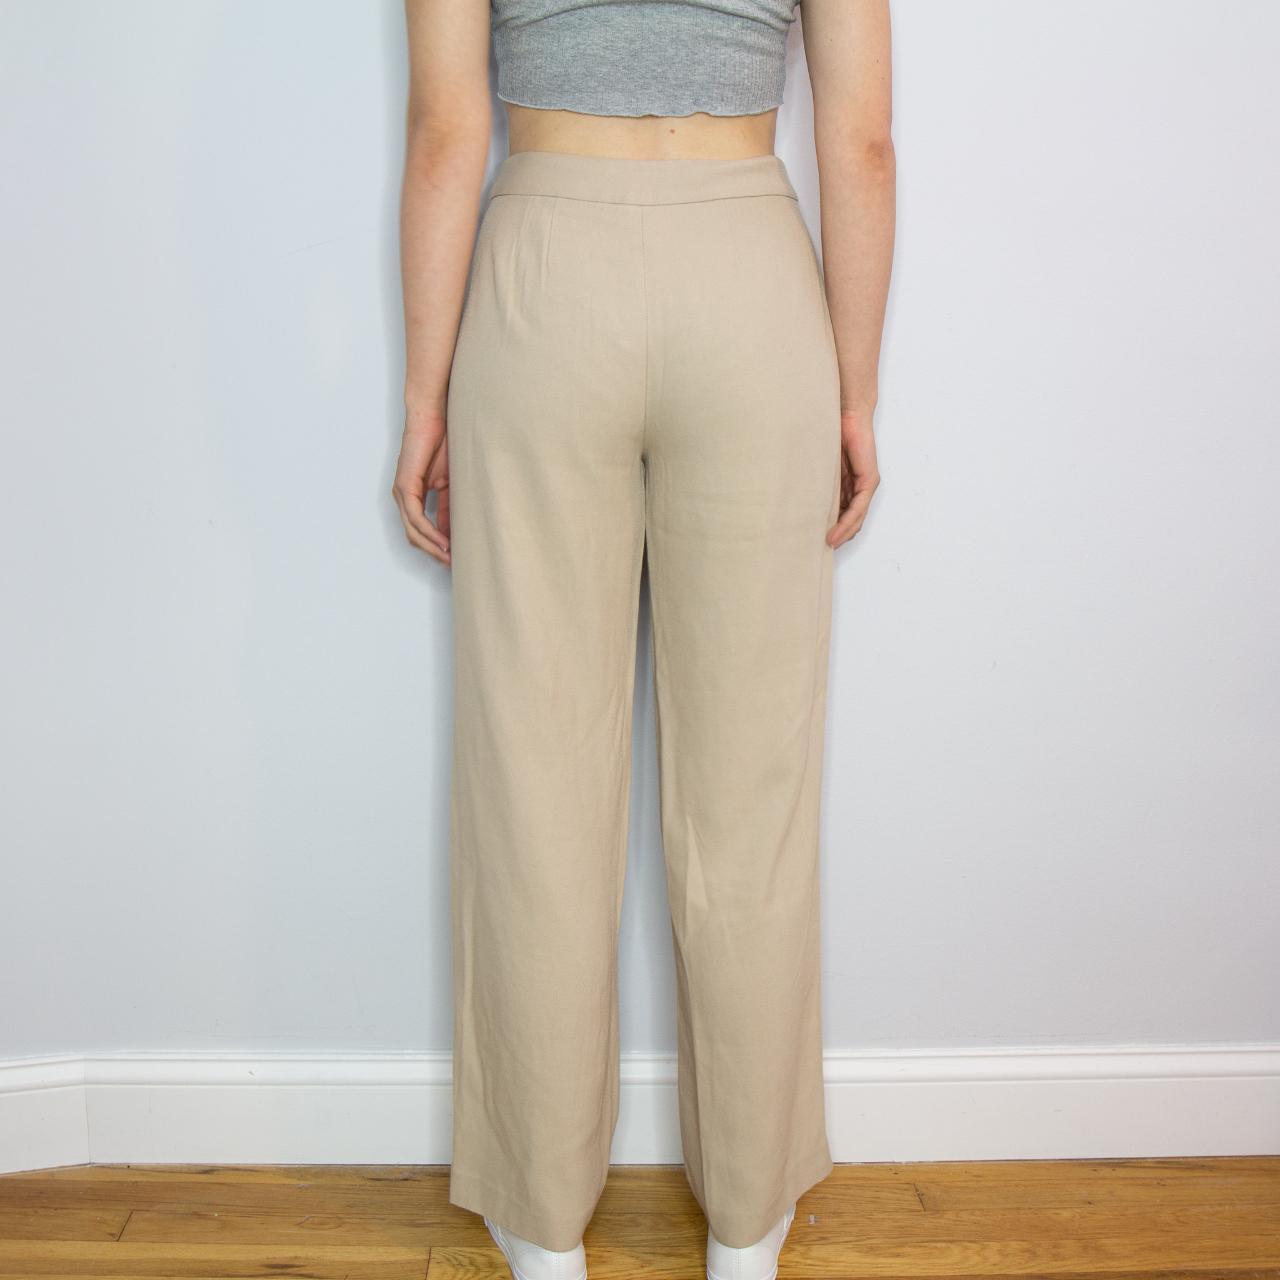 Product Image 3 - beige wide leg dress pants

FREE